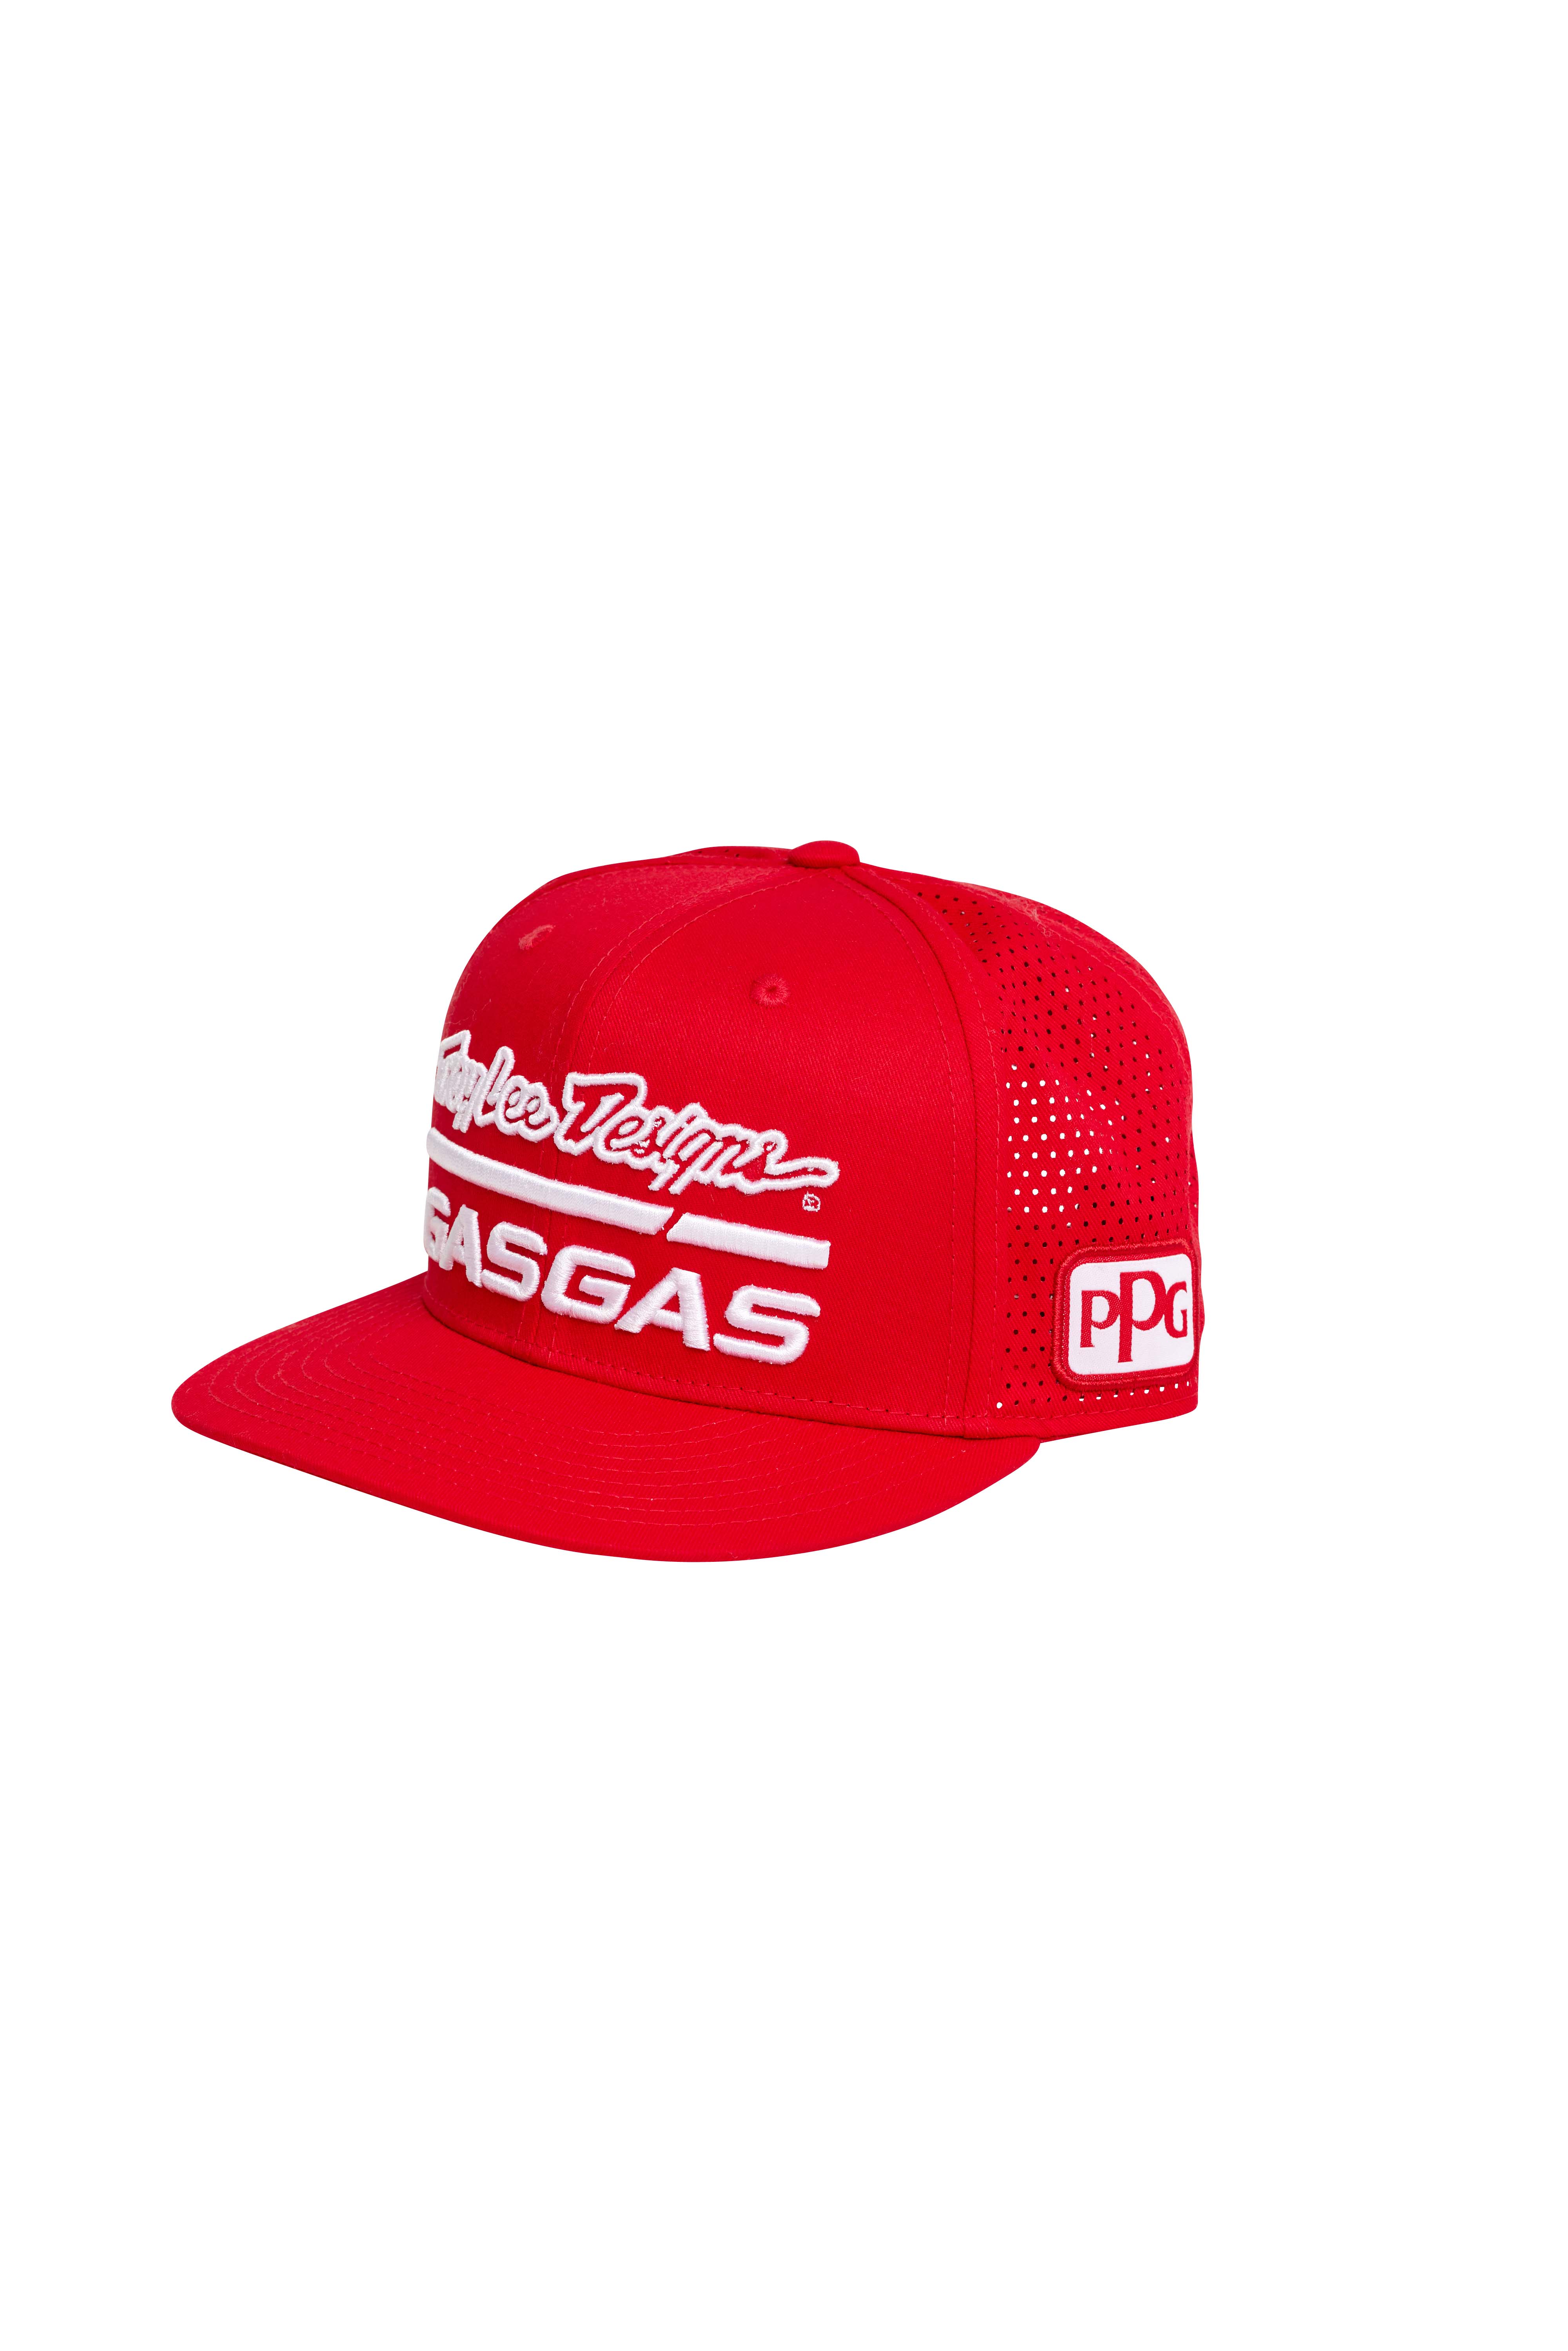 TLD GASGAS TEAM  FLAT CAP RED